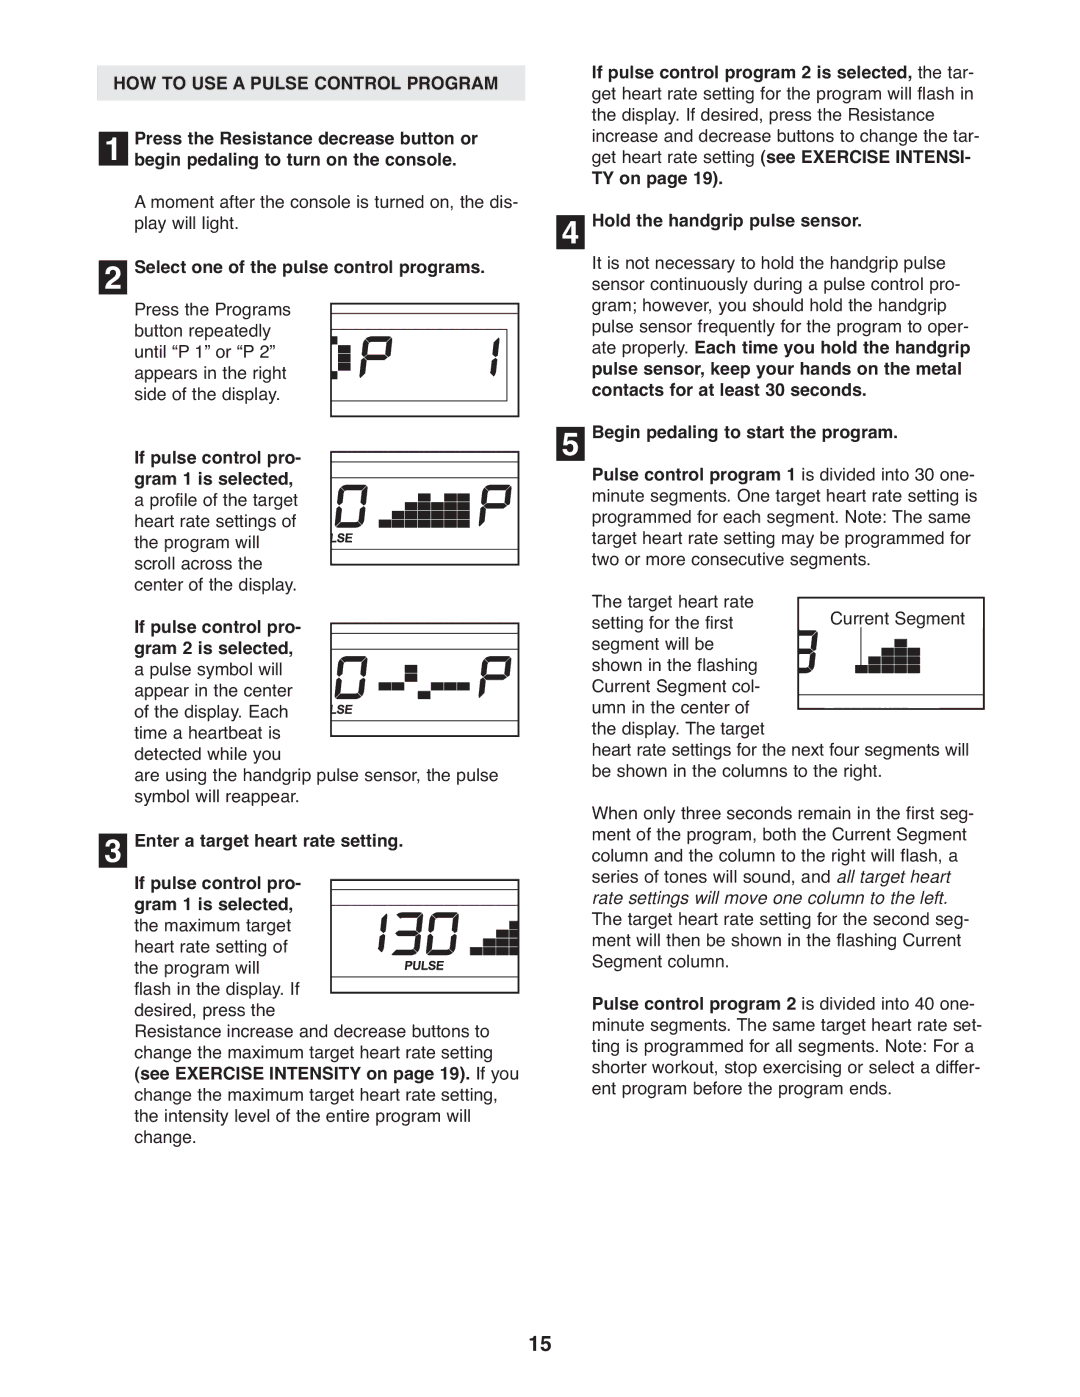 ProForm PFEL5105.1 user manual HOW to USE a Pulse Control Program 